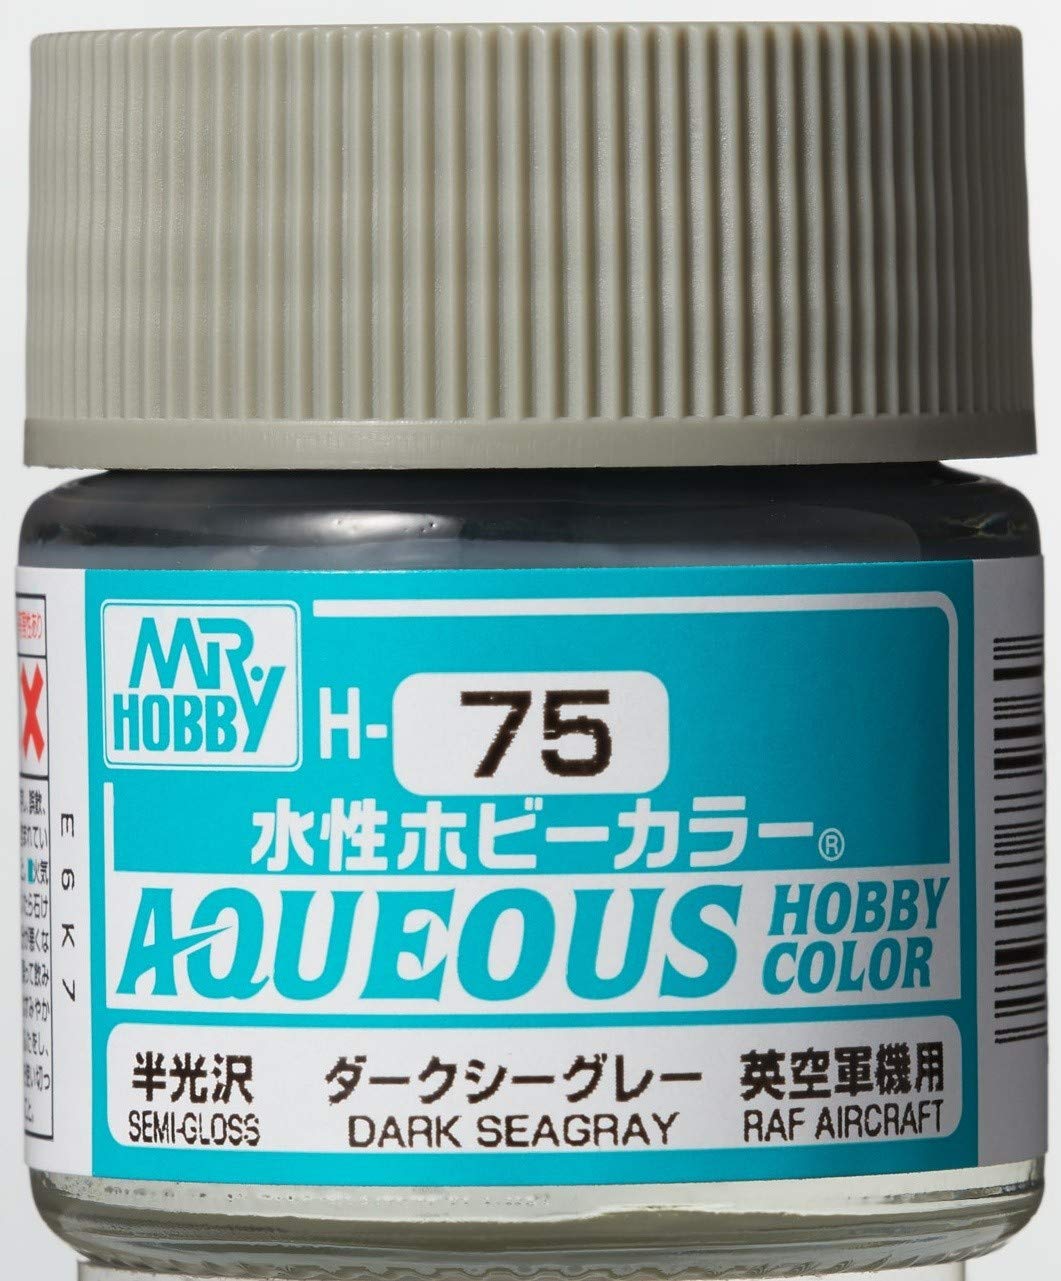 Mr. Hobby Aqueous Hobby Color H75 Semi-Gloss Dark Sea Gray 10ml Bottle